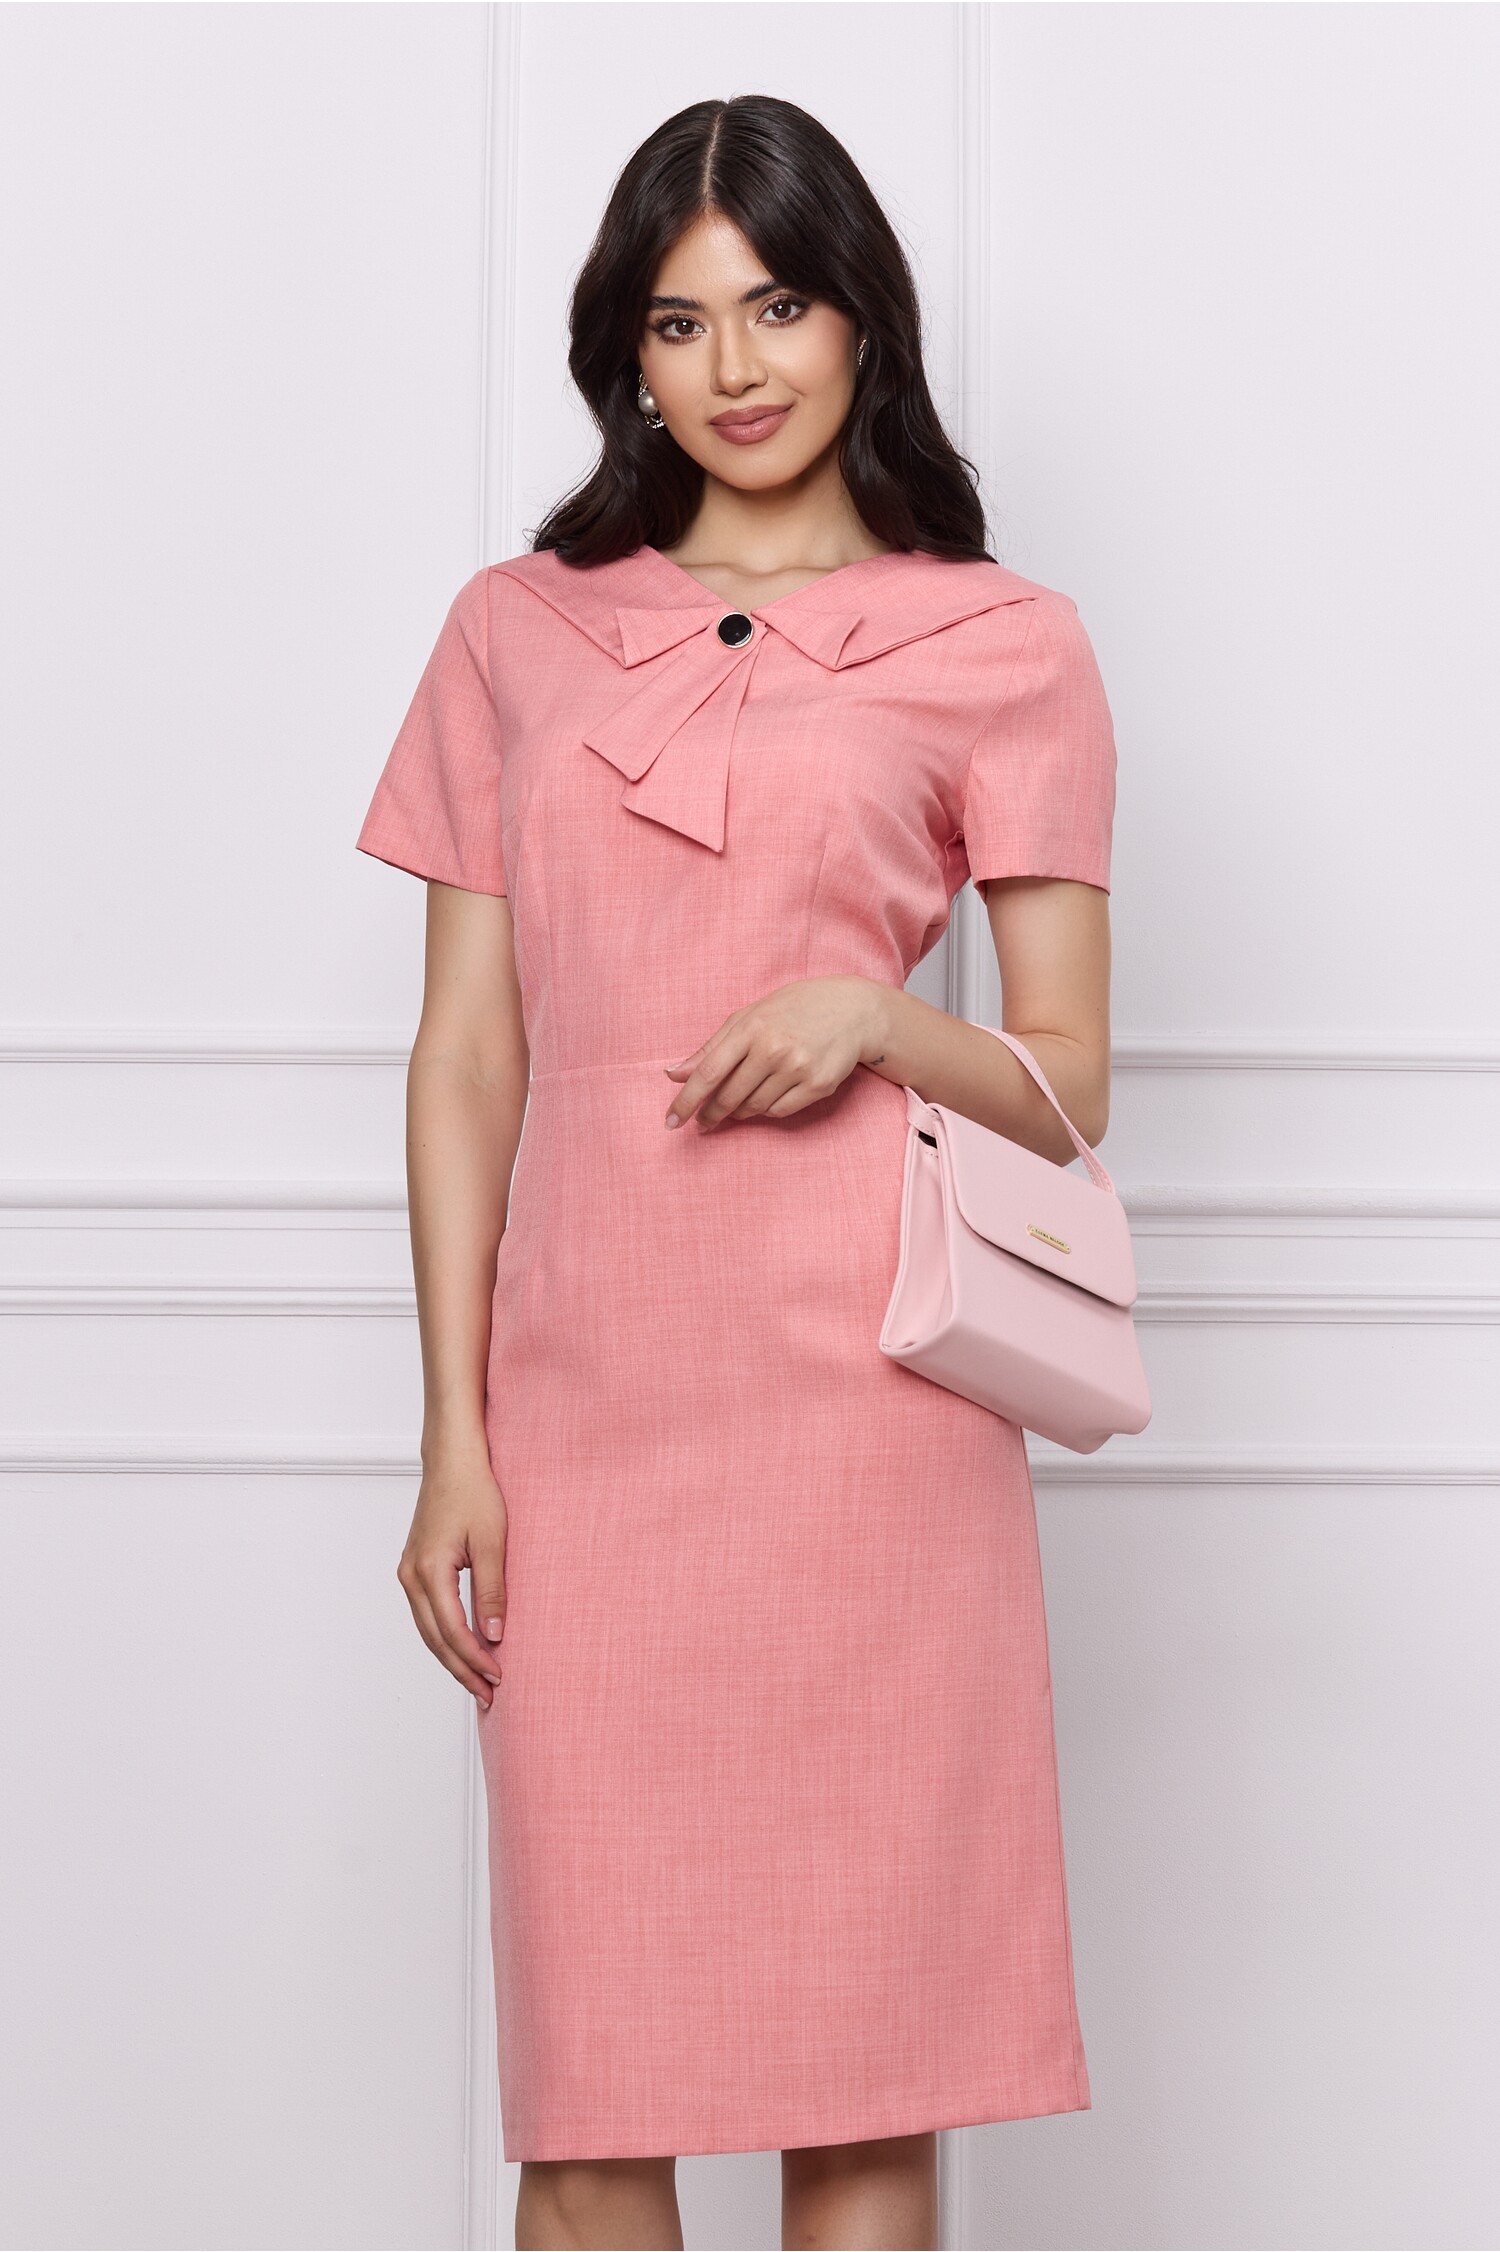 Rochie DY Fashion roz cu aplicatie tip cravata